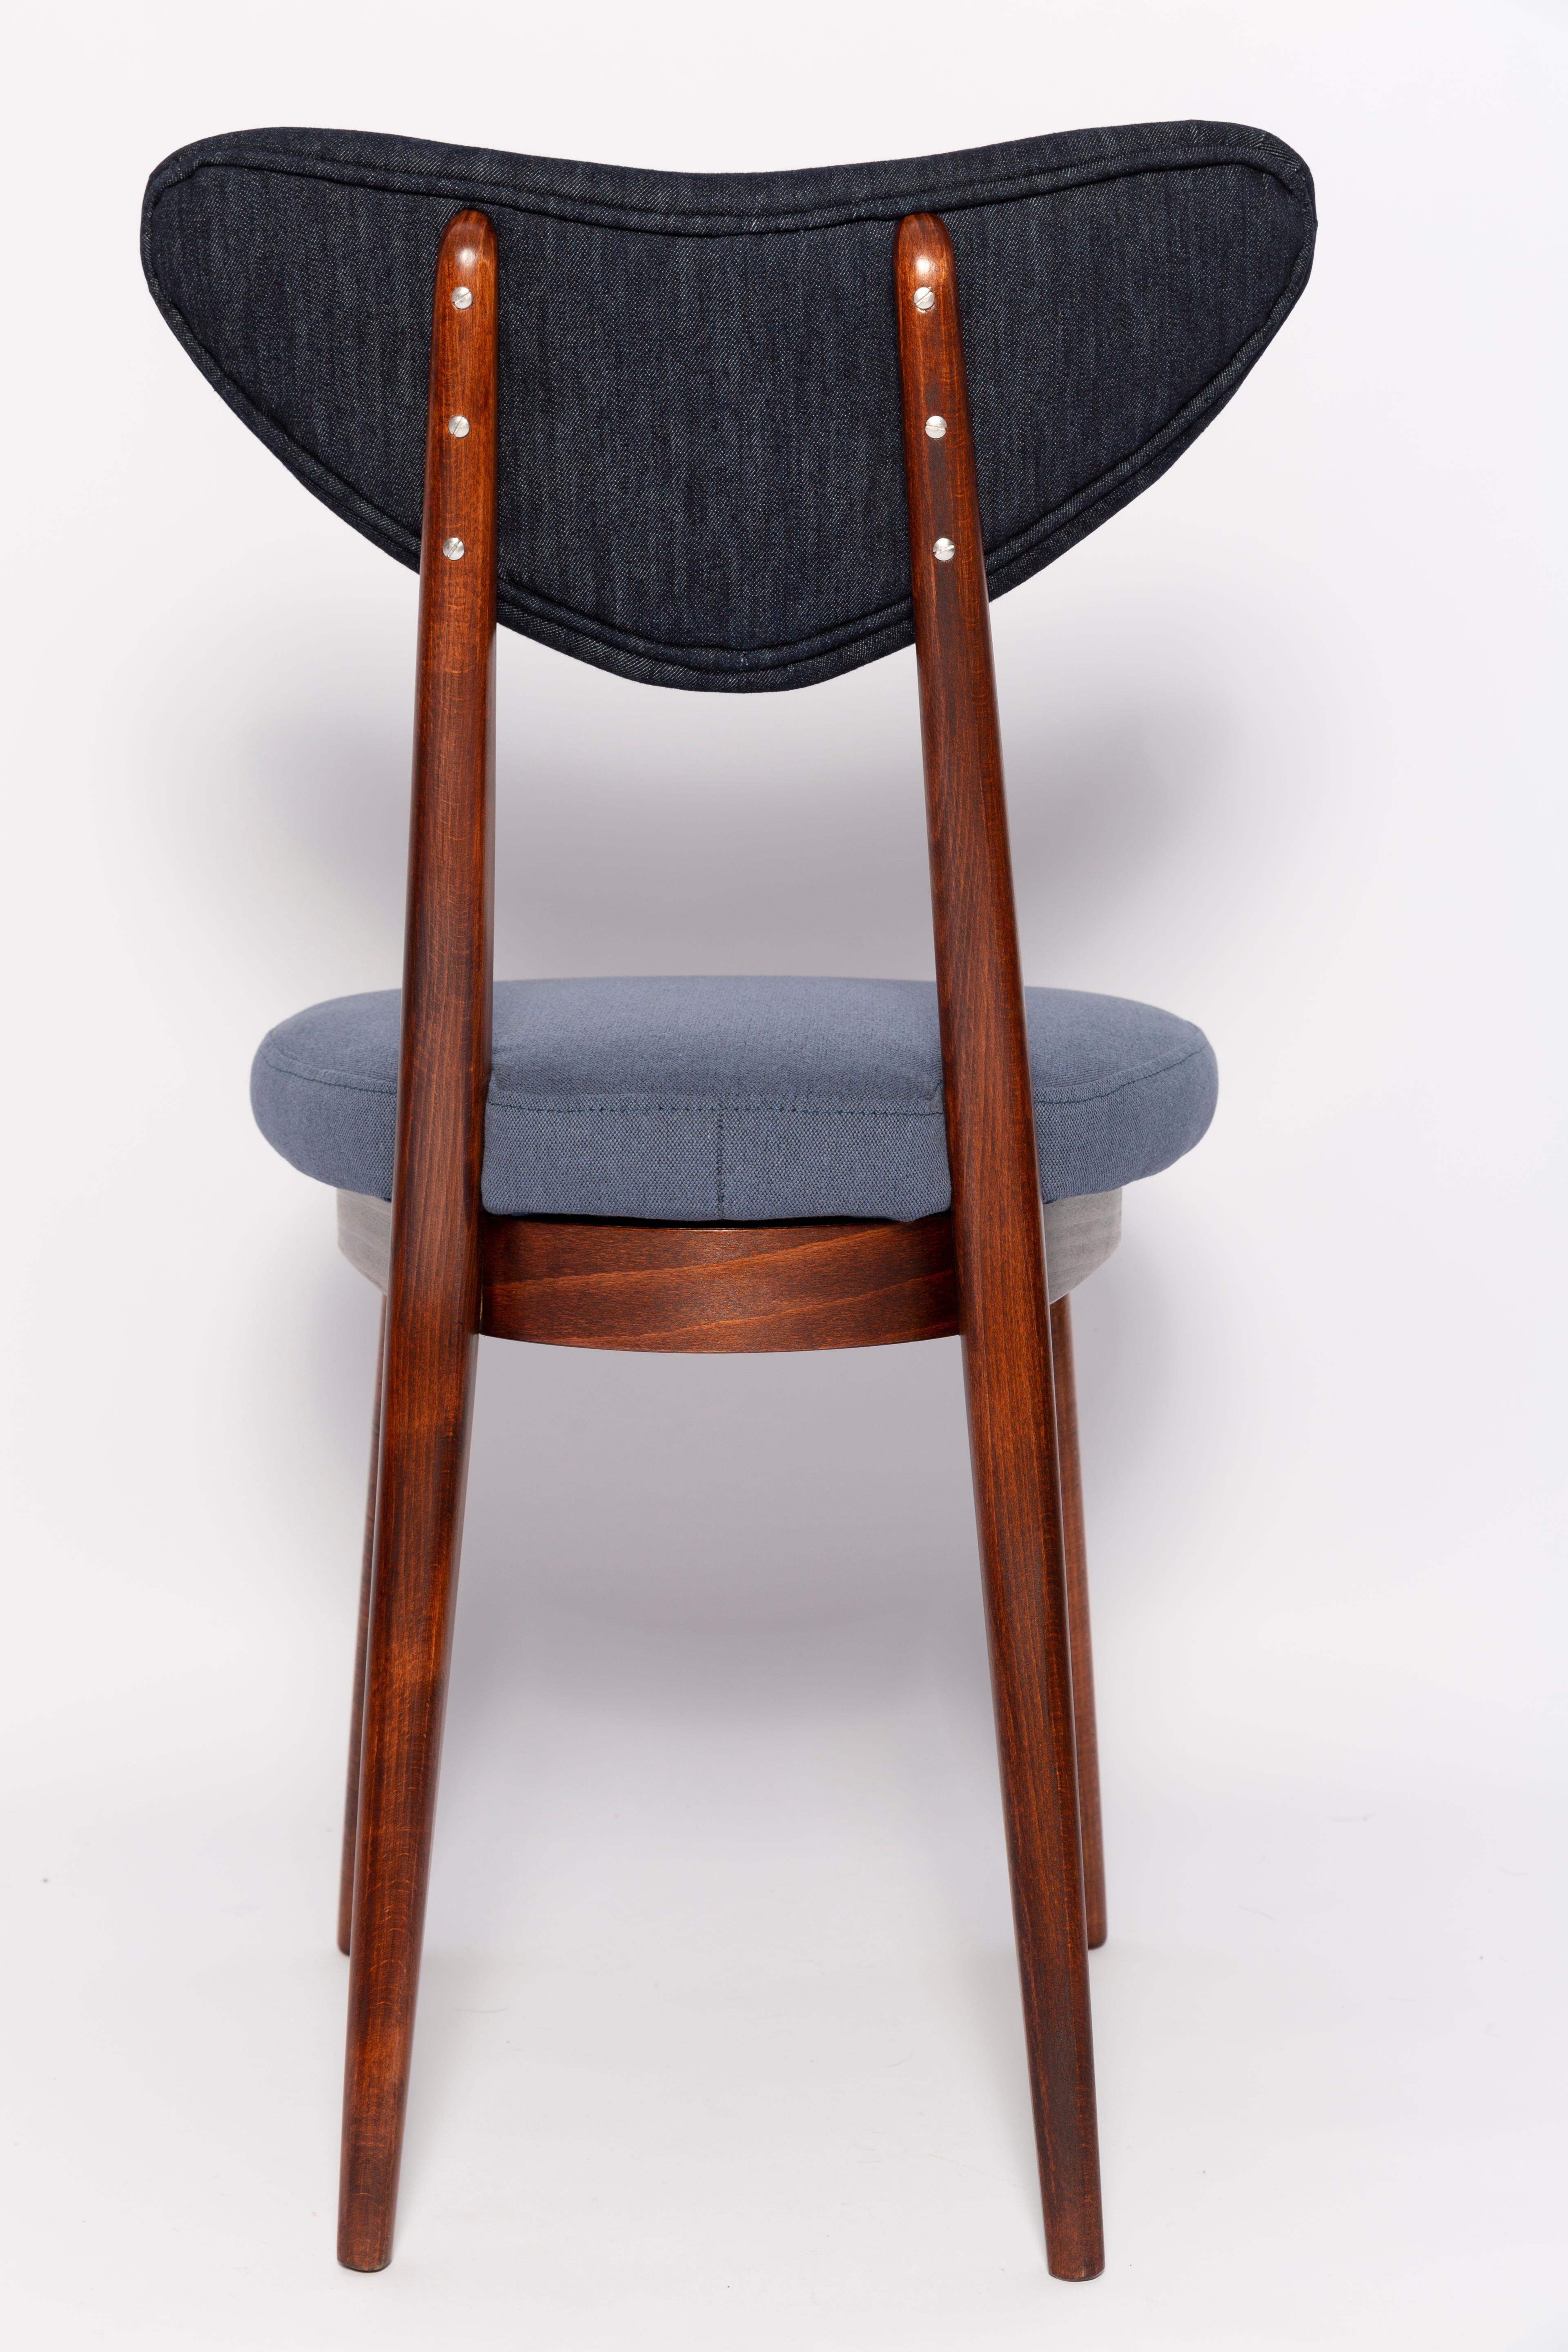 Set of Ten Midcentury Medium and Dark Blue Denim Heart Chairs, Europe, 1960s For Sale 3